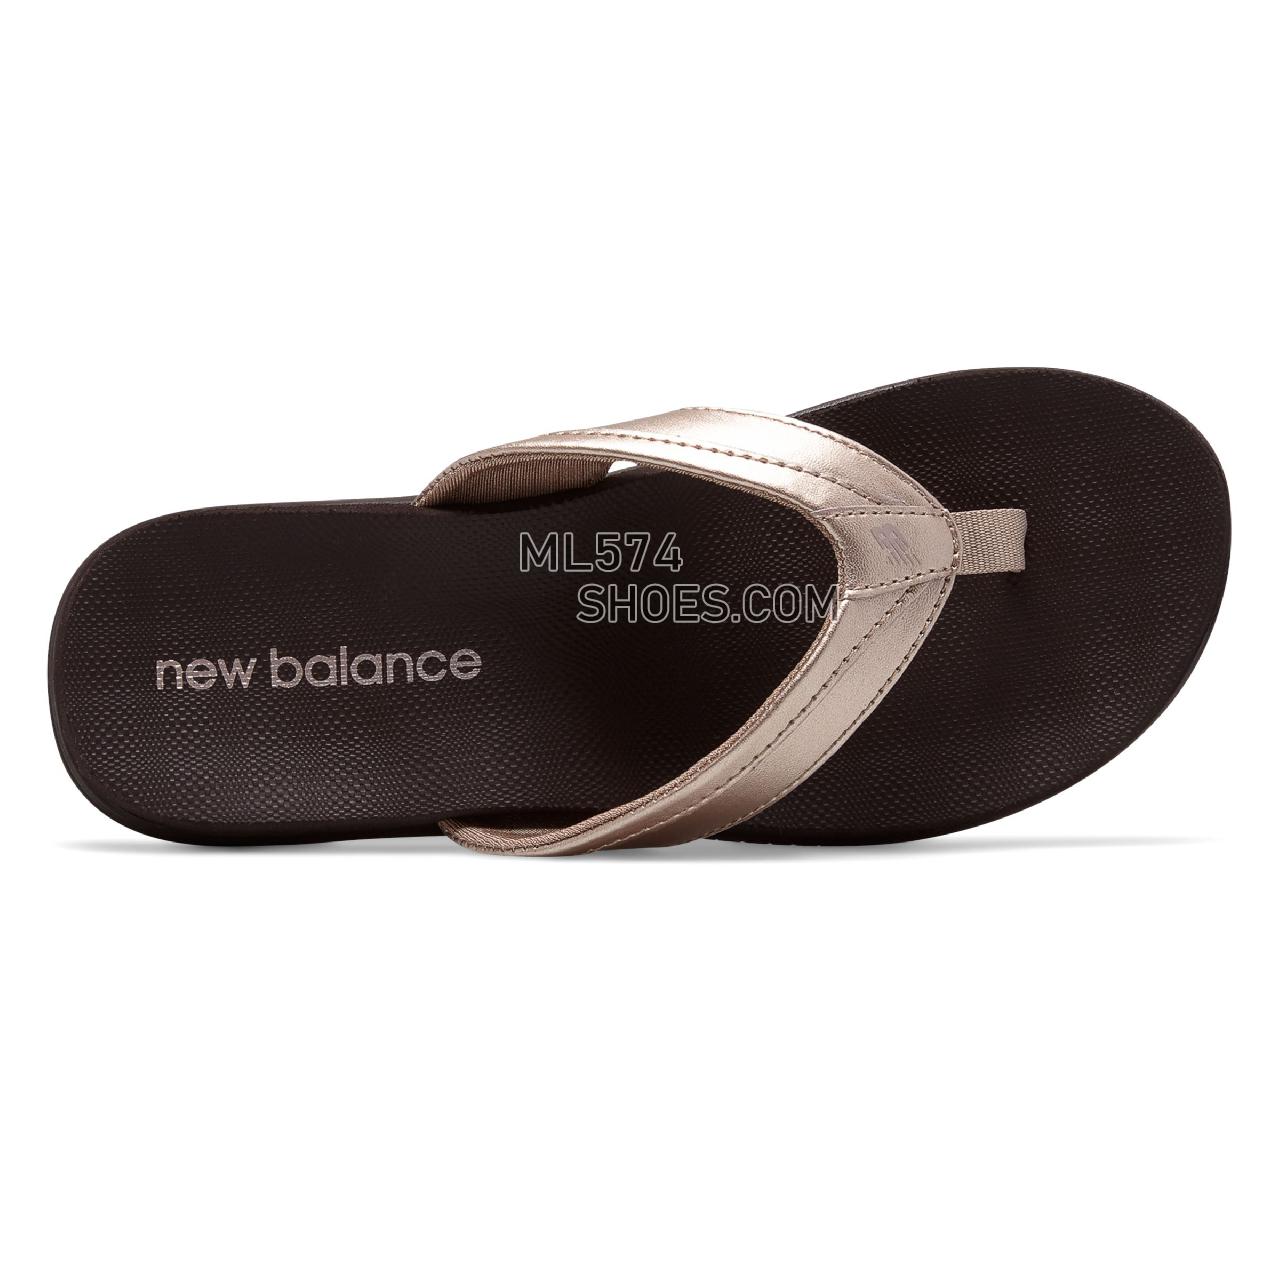 New Balance Jojo Thong - Women's 6090 - Sandals Rose Gold - W6090RGD